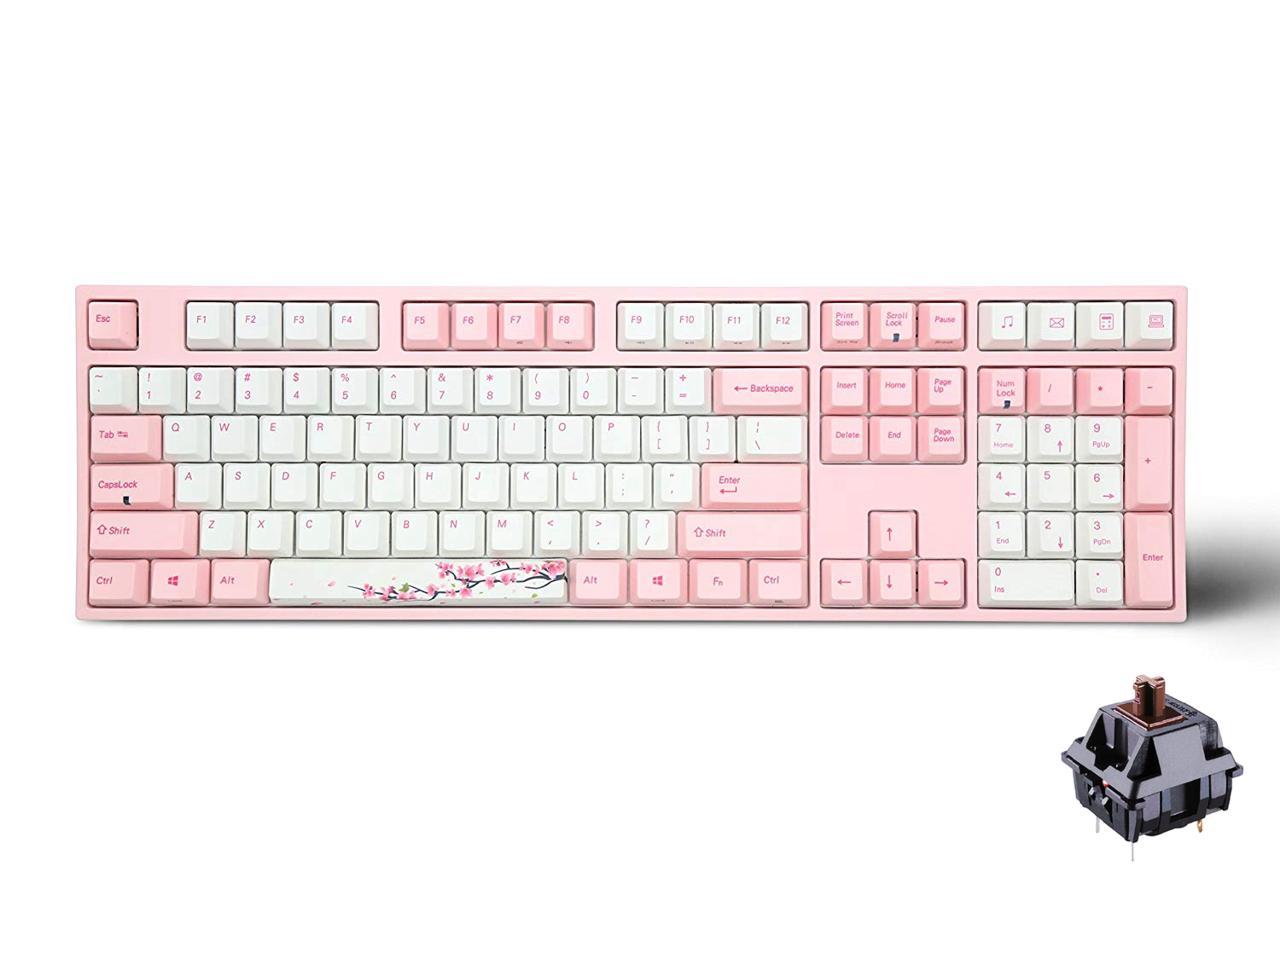 108 Key Cherry mx Brown Keyboard Pink Girl Color Matching Keycap SA Dual Lens ABS Keycap MX Mechanical Switch Keyboard 130 Keys Colore : 130 Keys